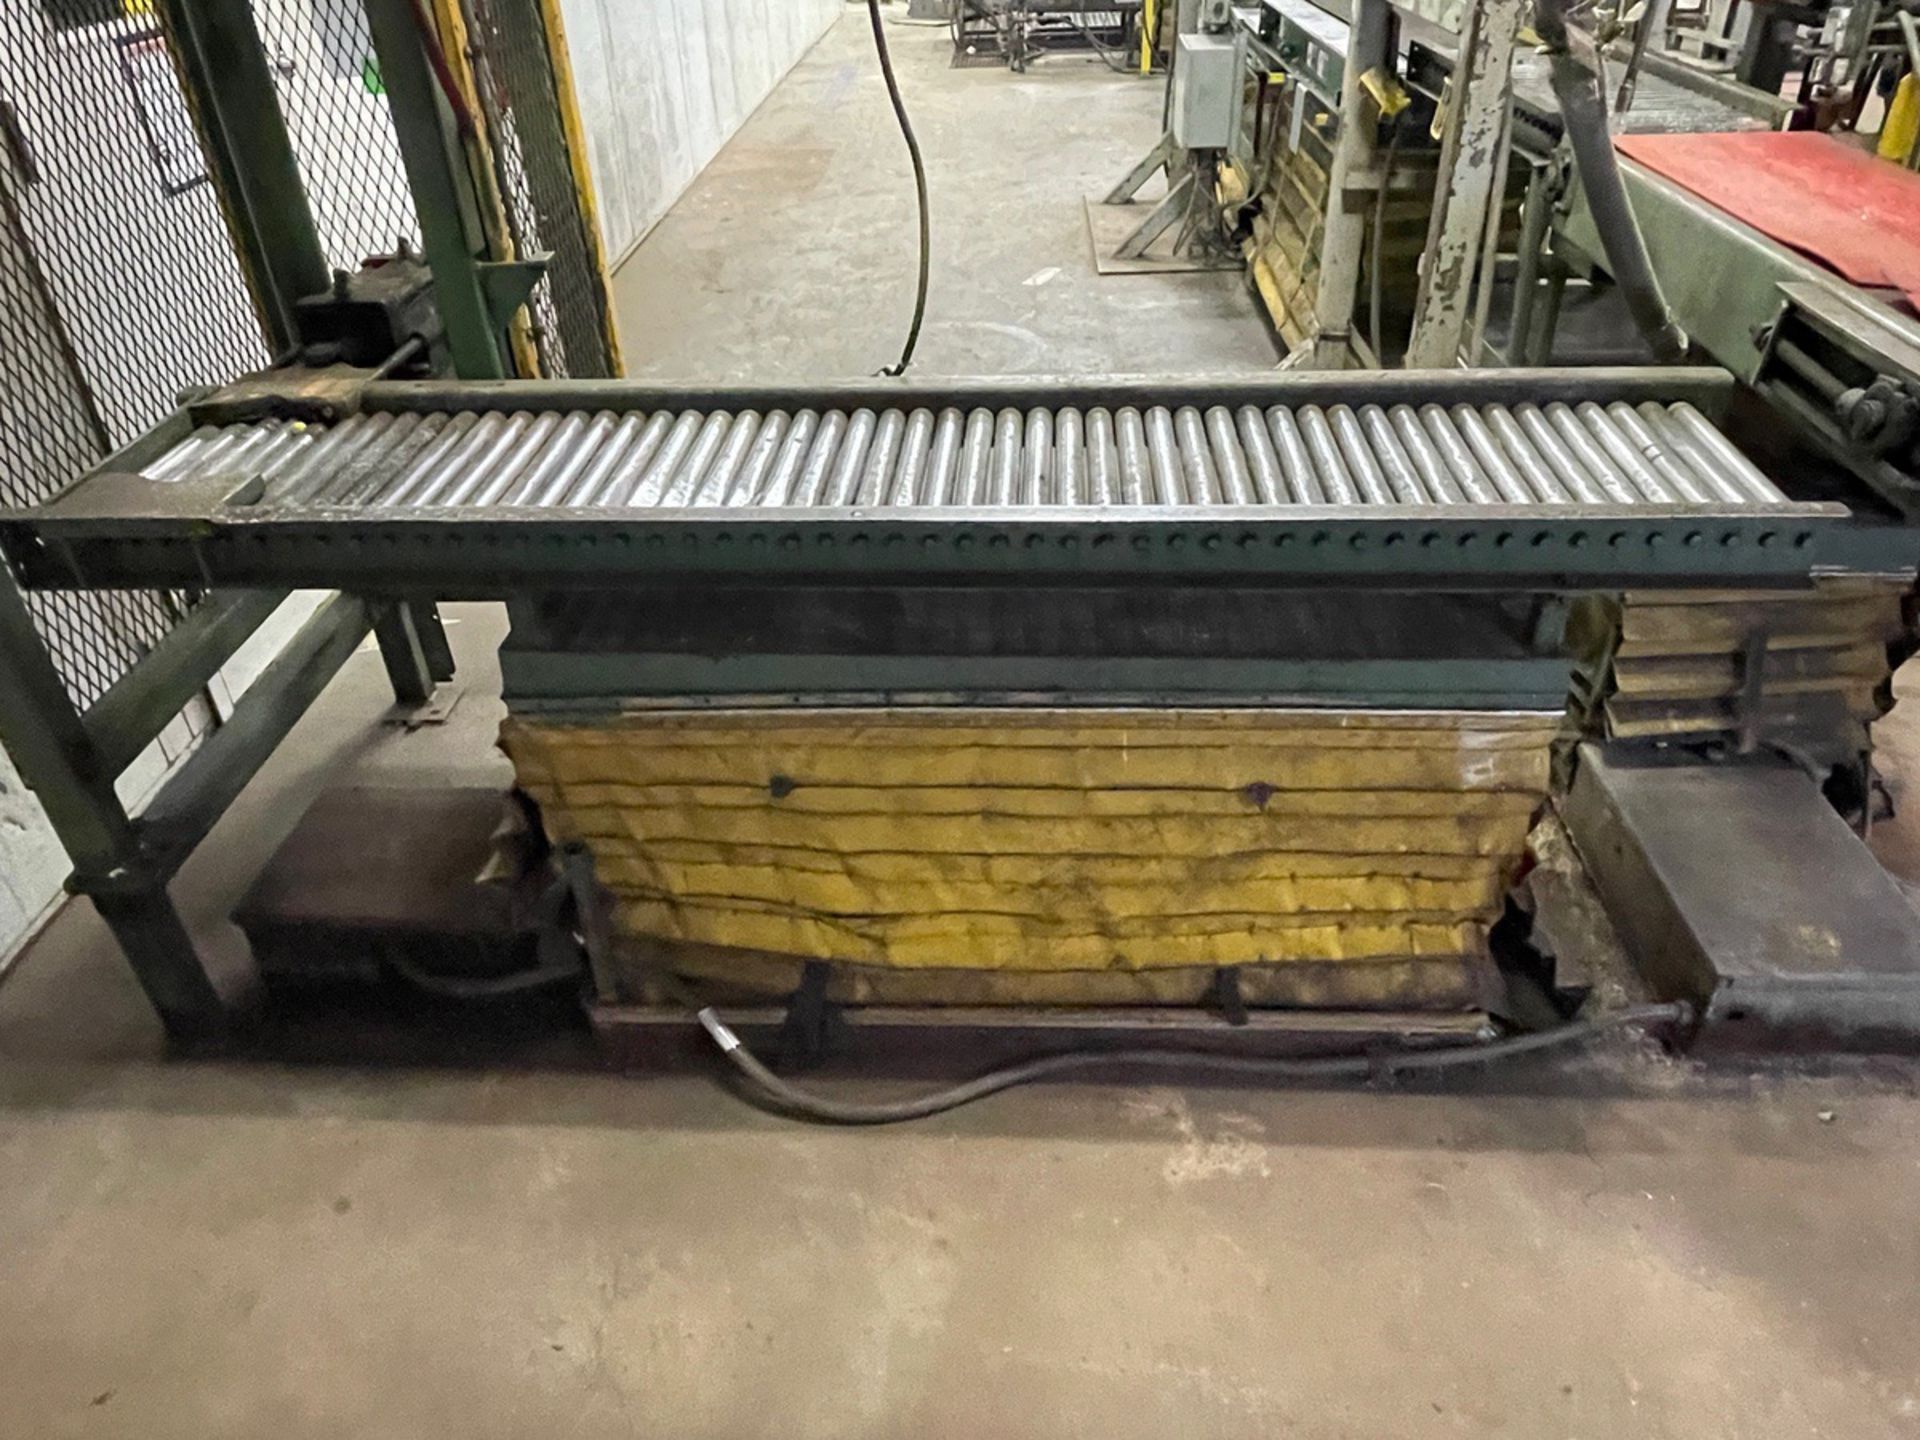 Powered Adjustable Height Steel Roller Conveyor, Approx. 14" x 6'6" | Rig Fee $50 - Image 2 of 2